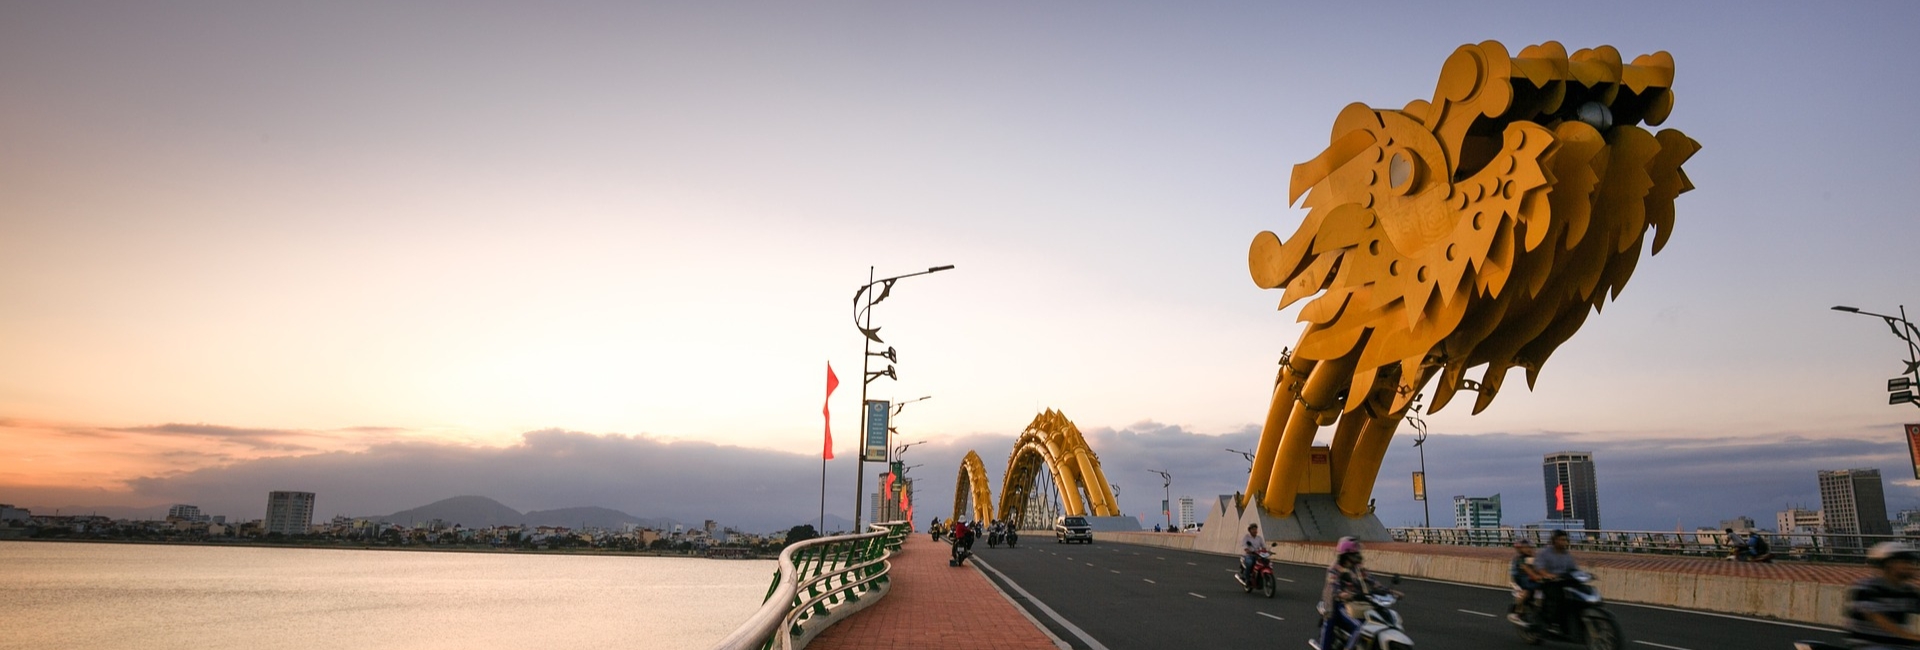 The Golden Bridge Vietnam going viral